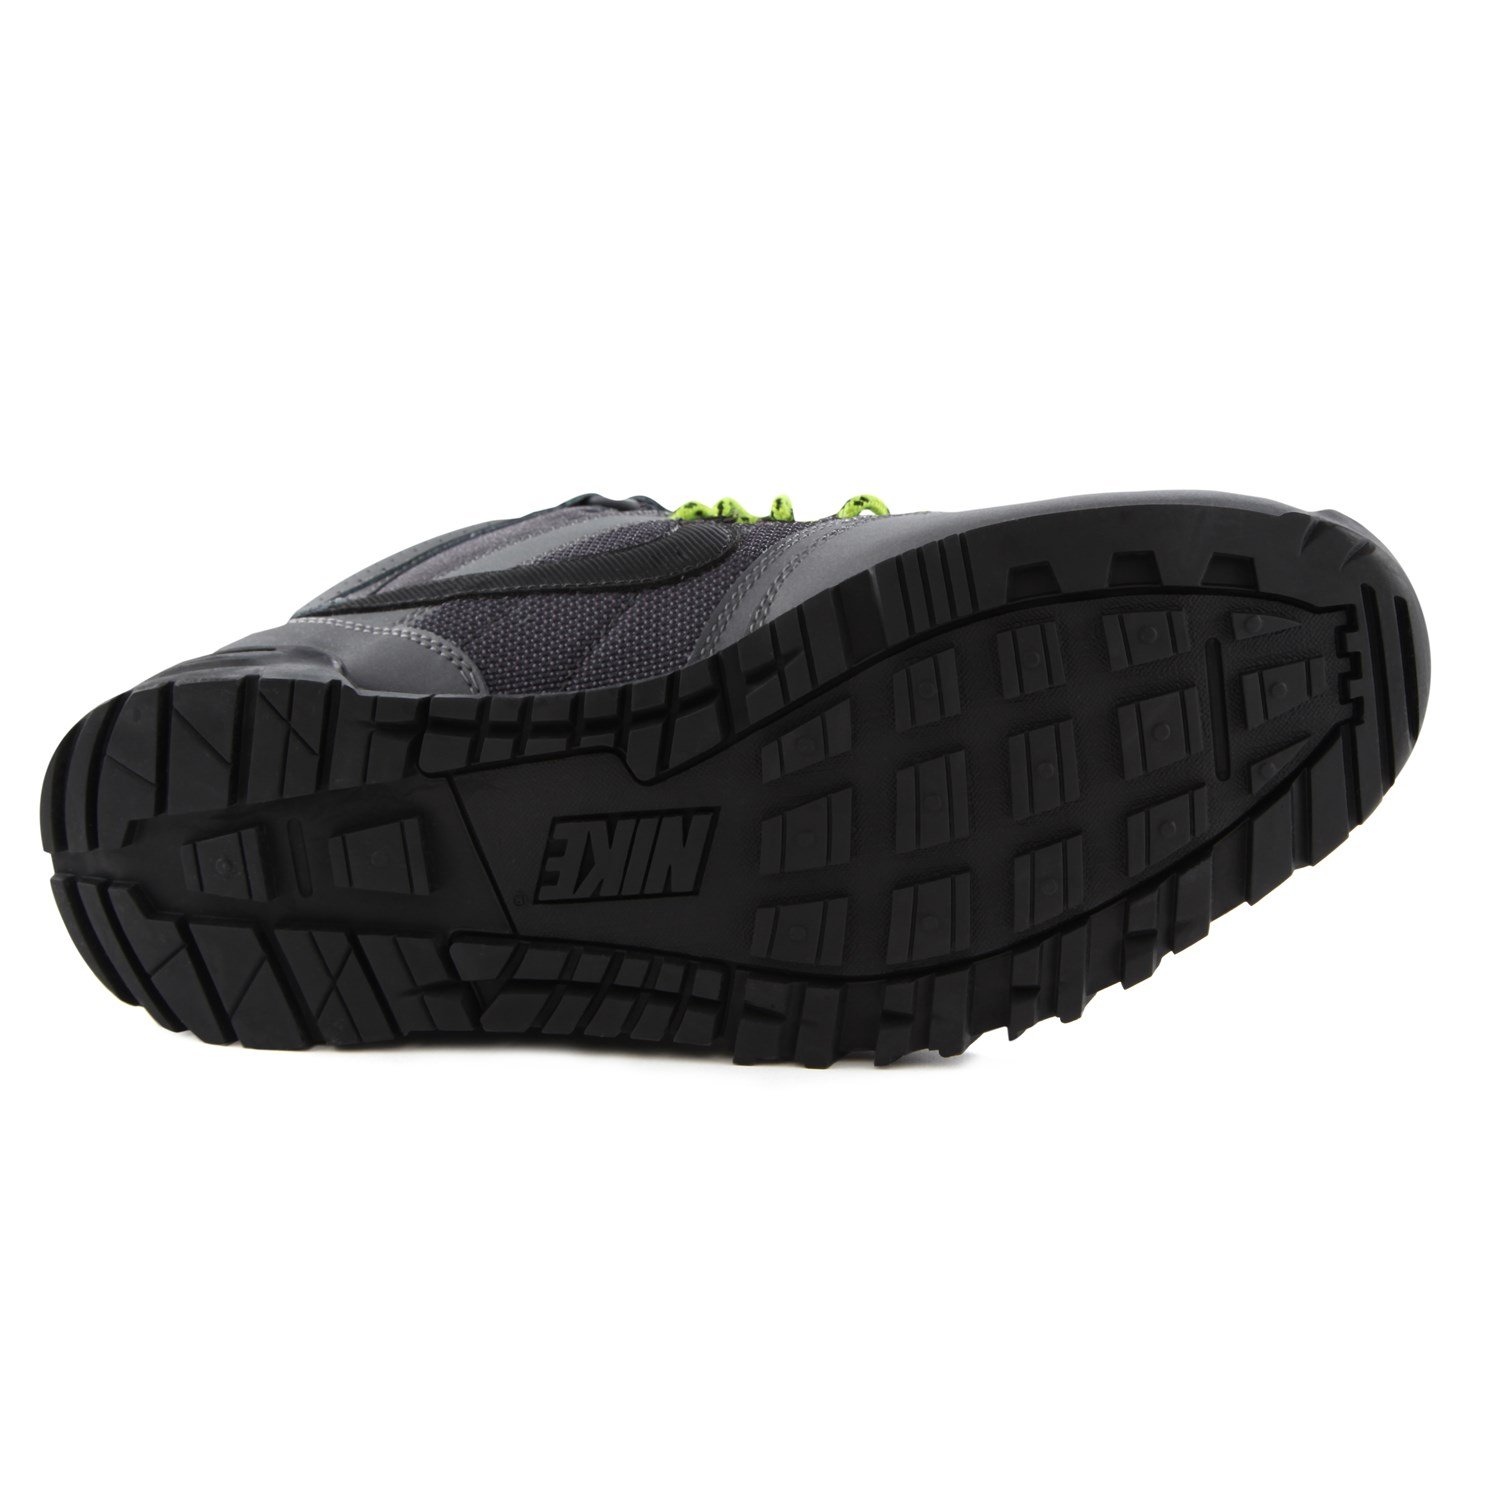 Grasa Tropical ficción Nike Mogan Mid 2 OMS Shoes | evo